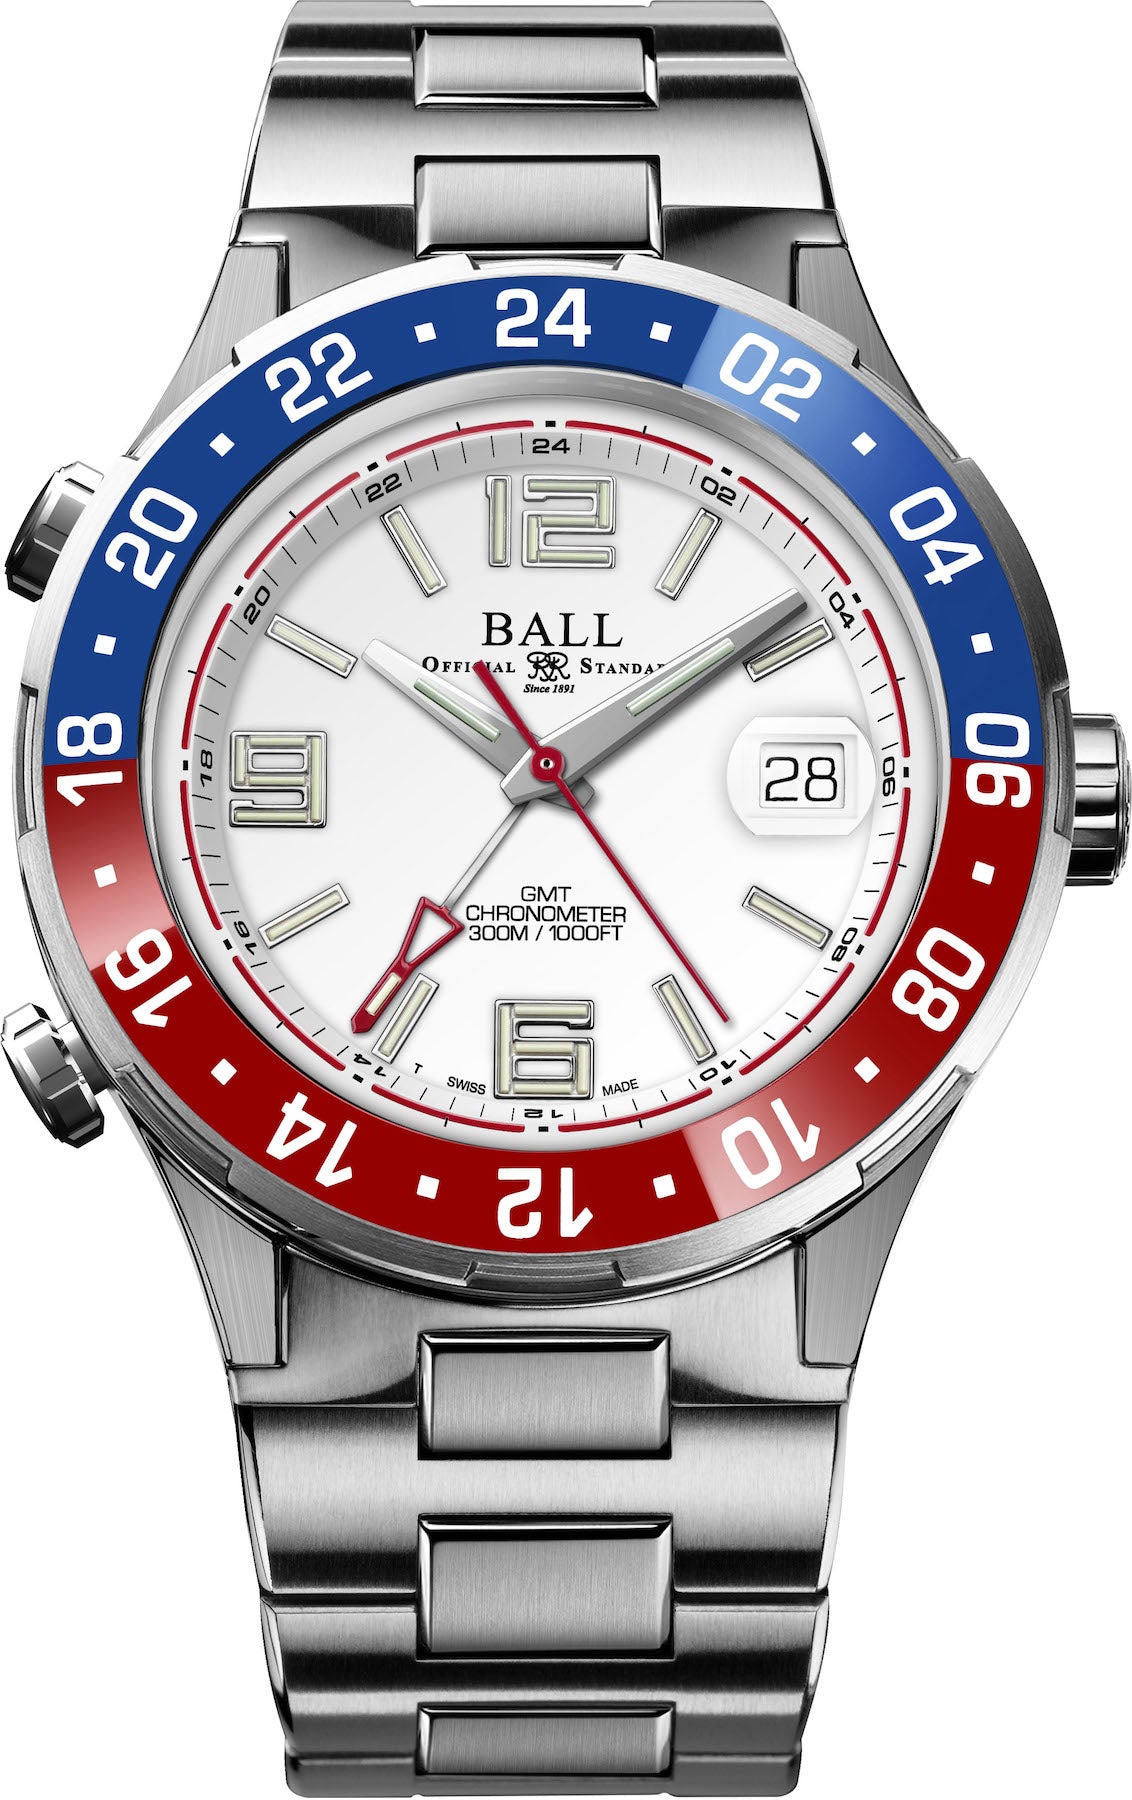 Photos - Wrist Watch Ball Watch Company Roadmaster Pilot GMT Limited Edition - White BL-2358 